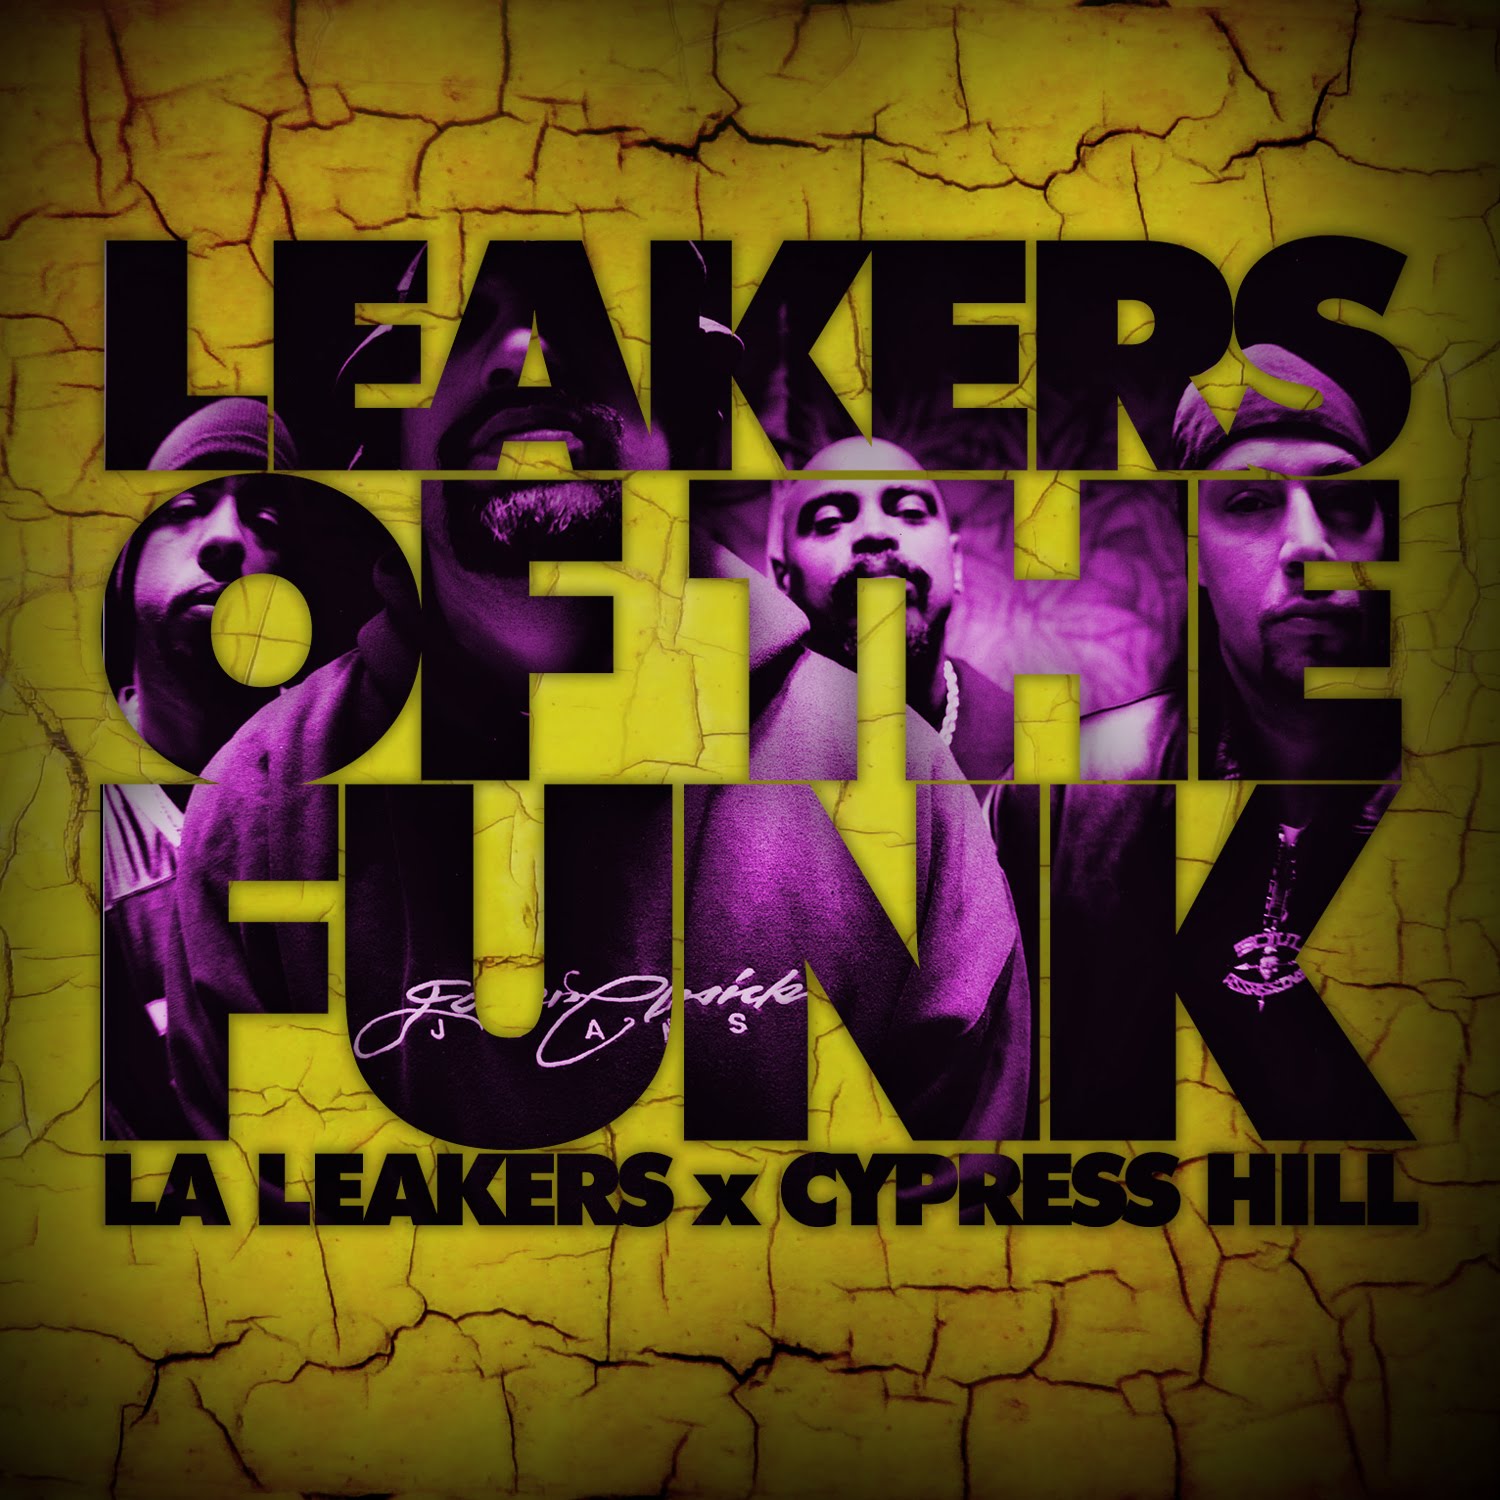 Skrewed Up Meskinz: LA Leakers x Cypress Hill - Leakers of The Funk [2010]1500 x 1500